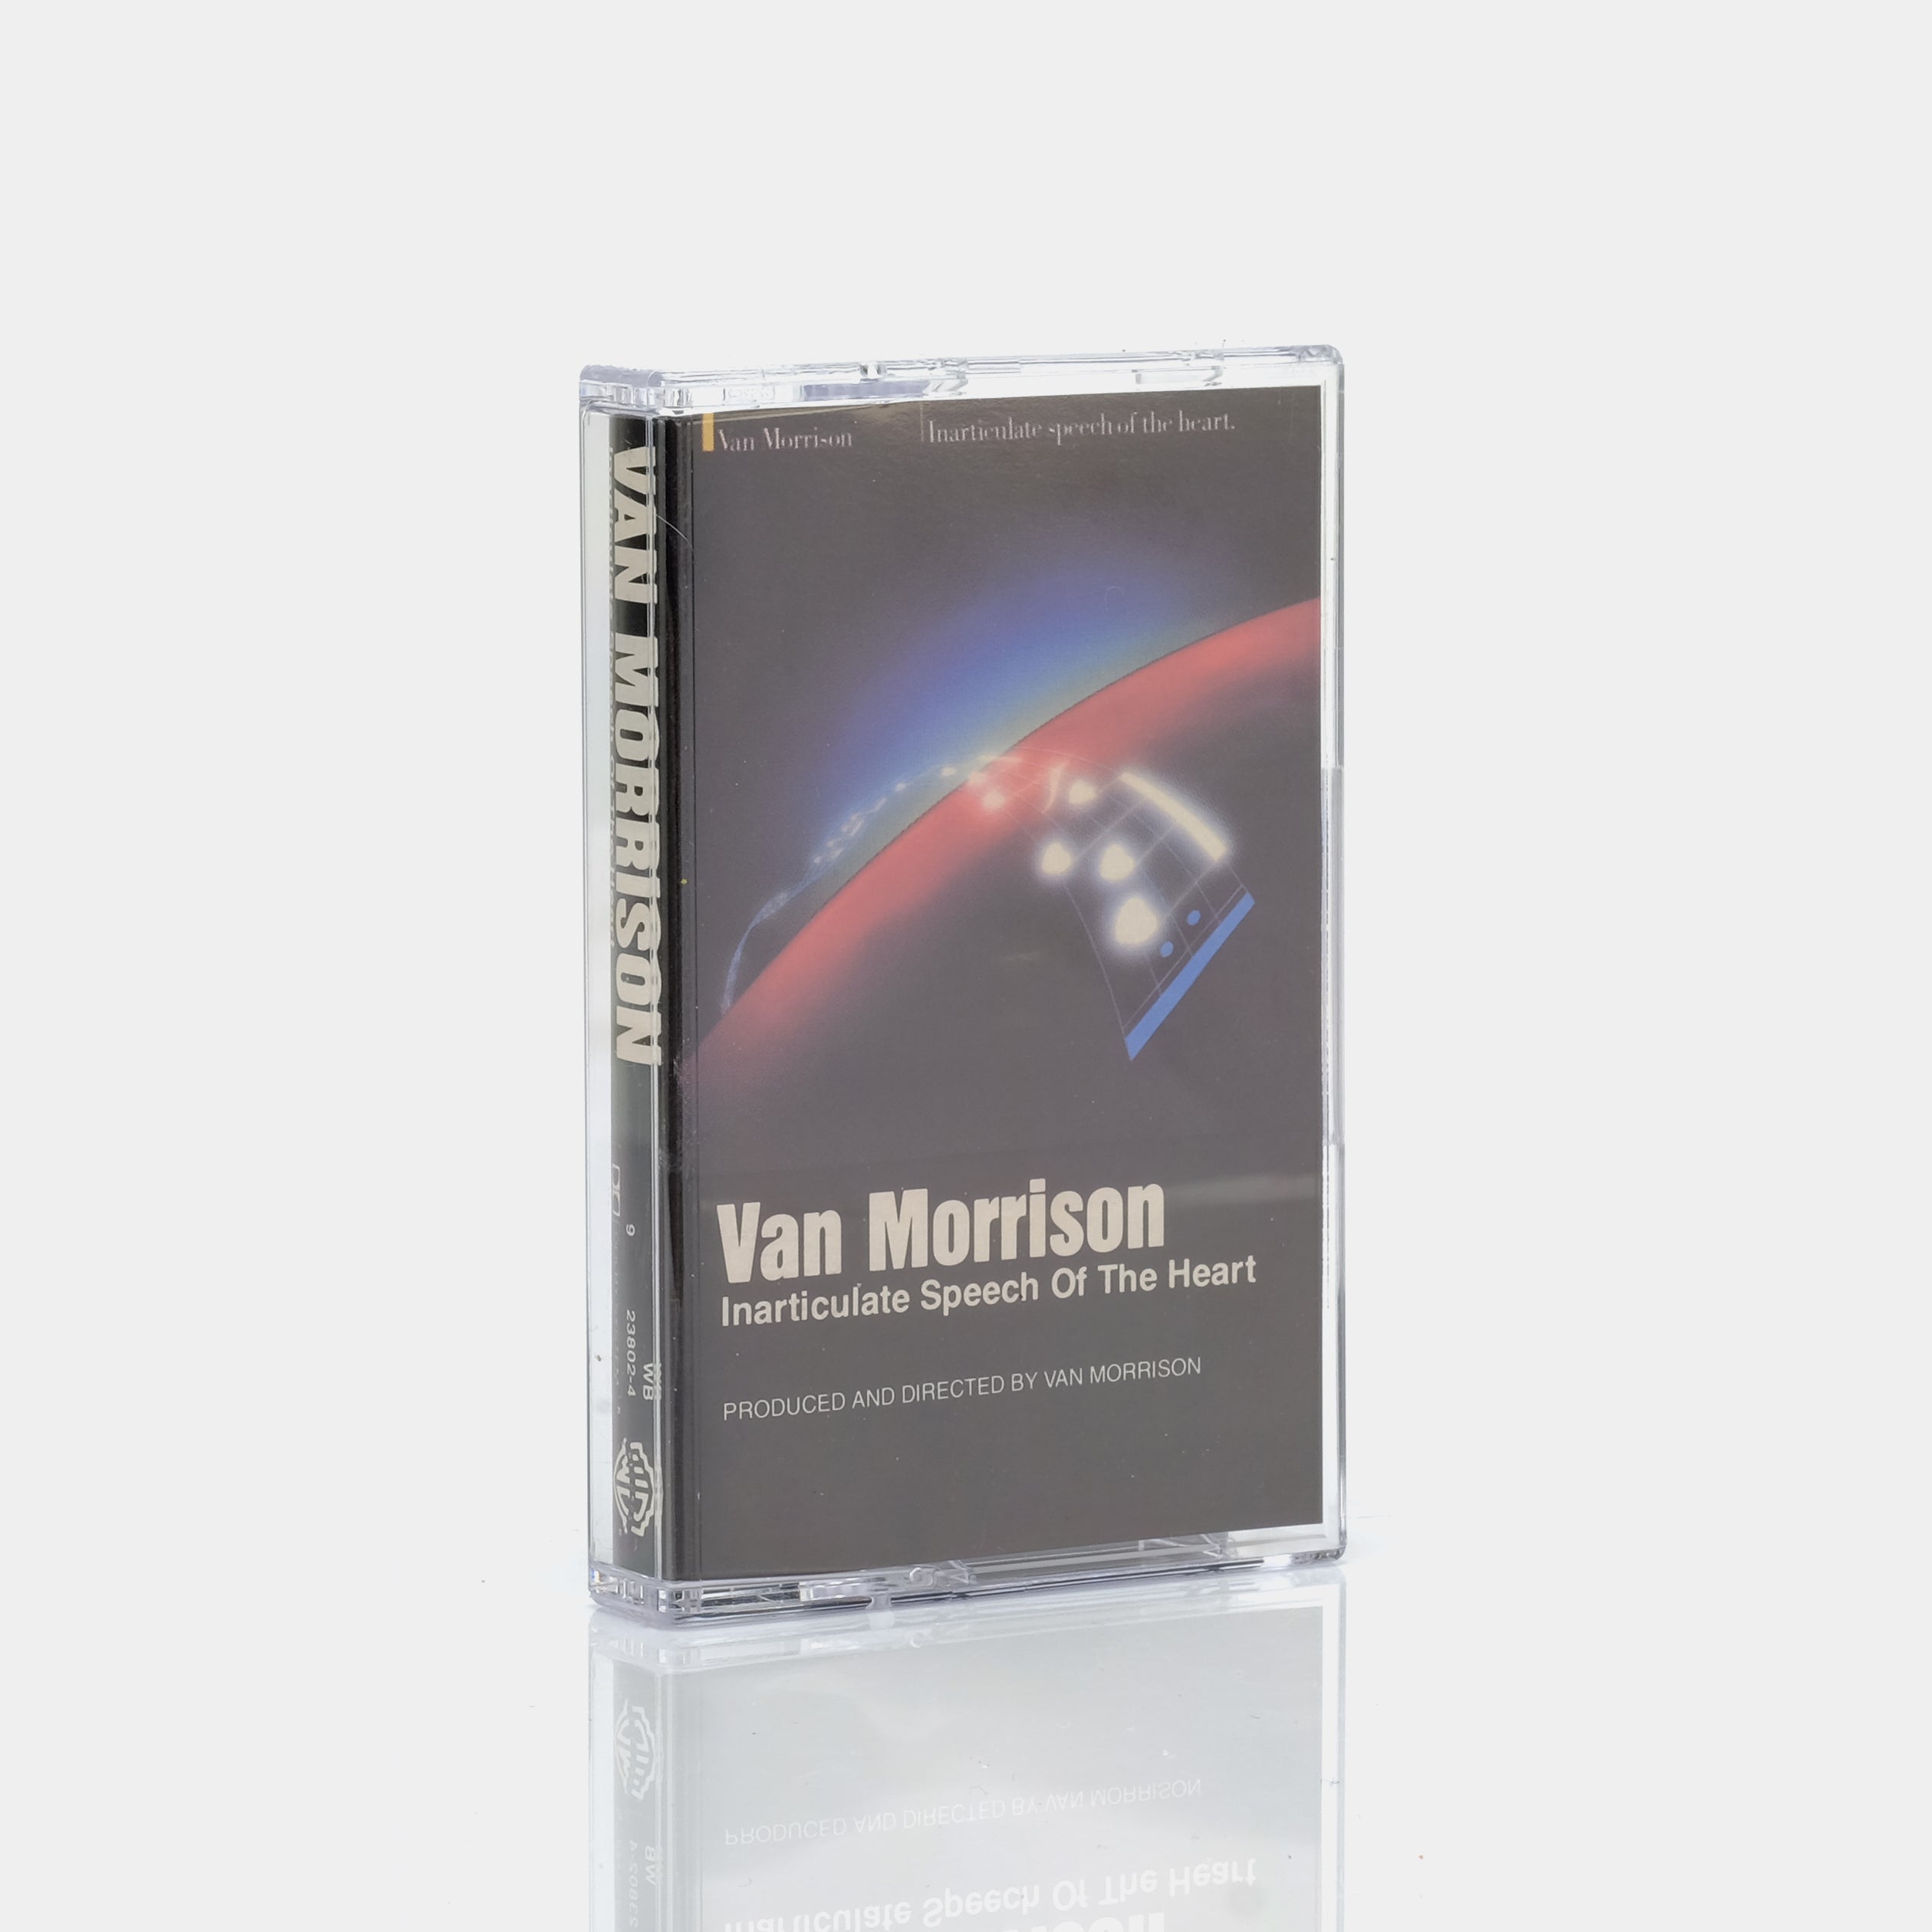 Van Morrison - Inarticulate Speech Of The Heart Cassette Tape